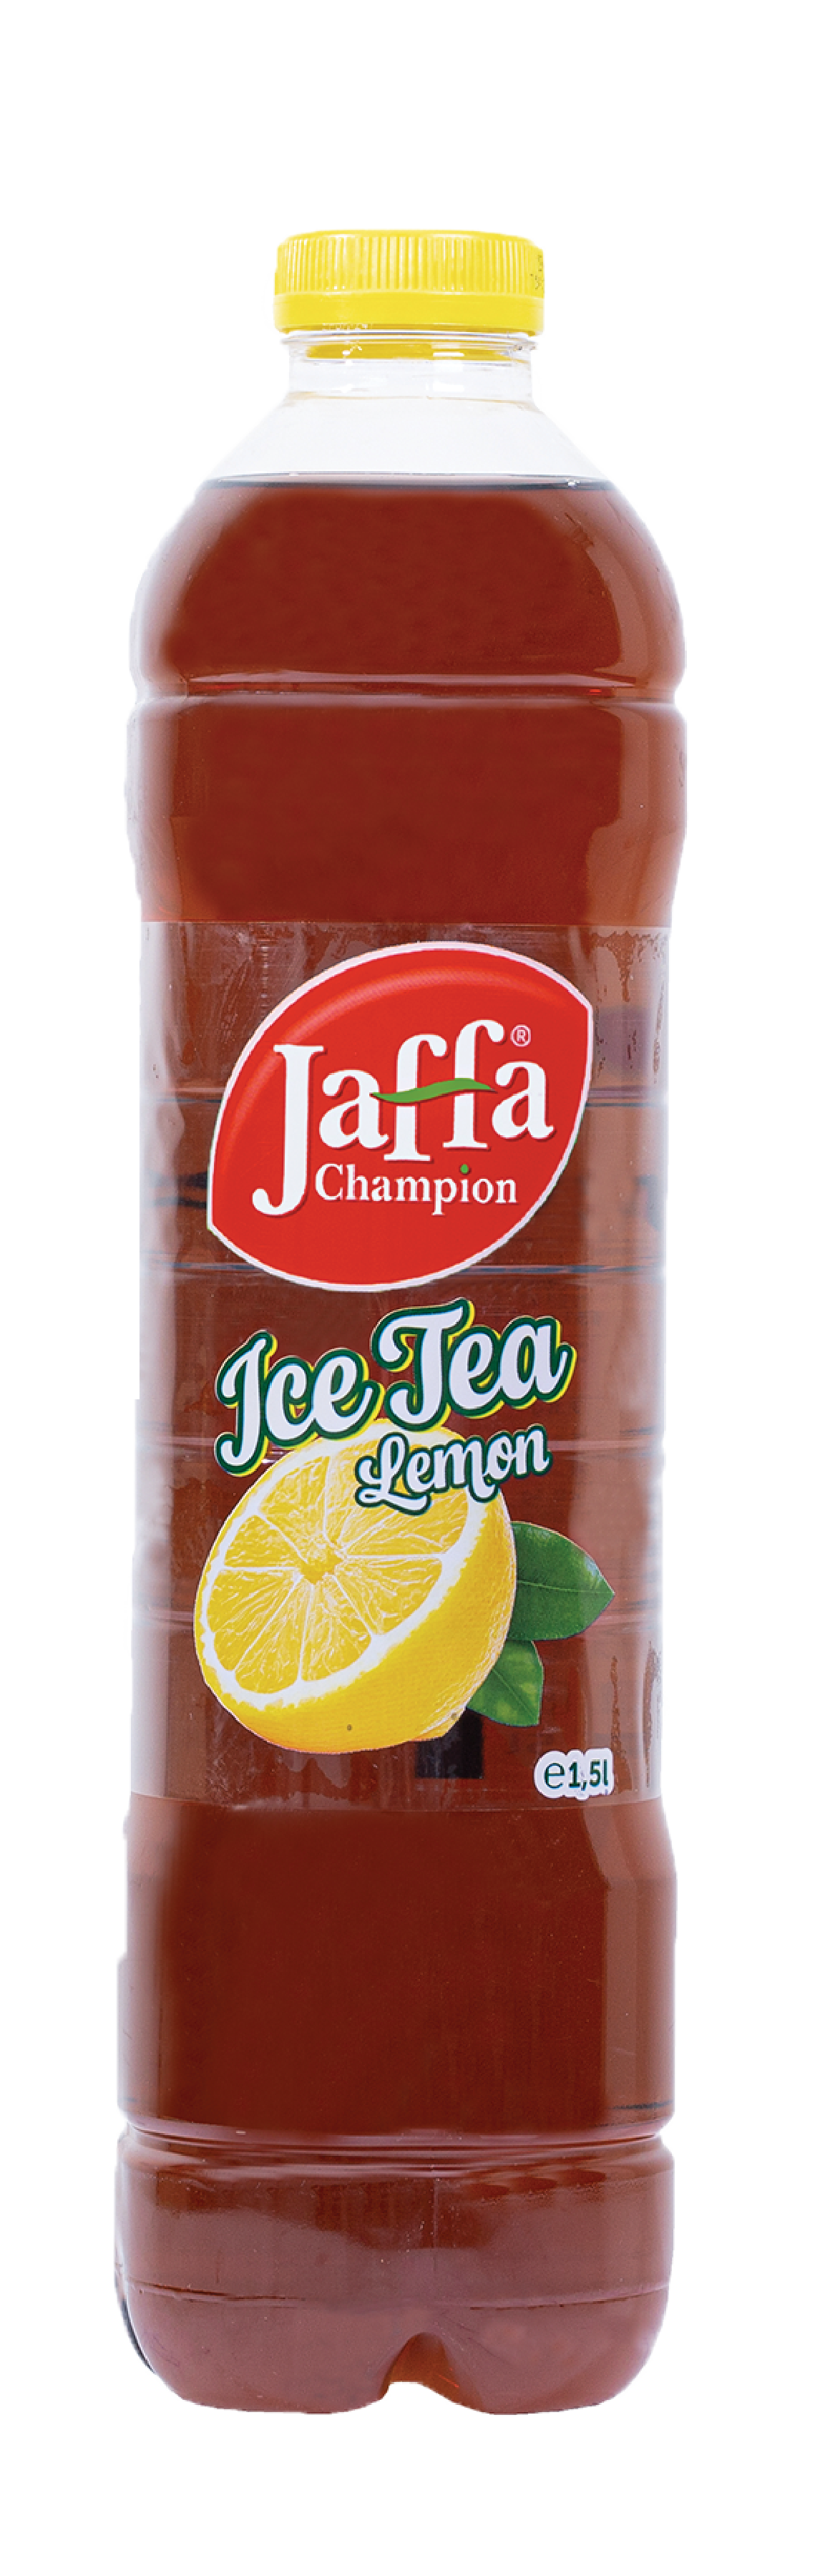 Jaffa Champion Eistee Zitrone 1.5L